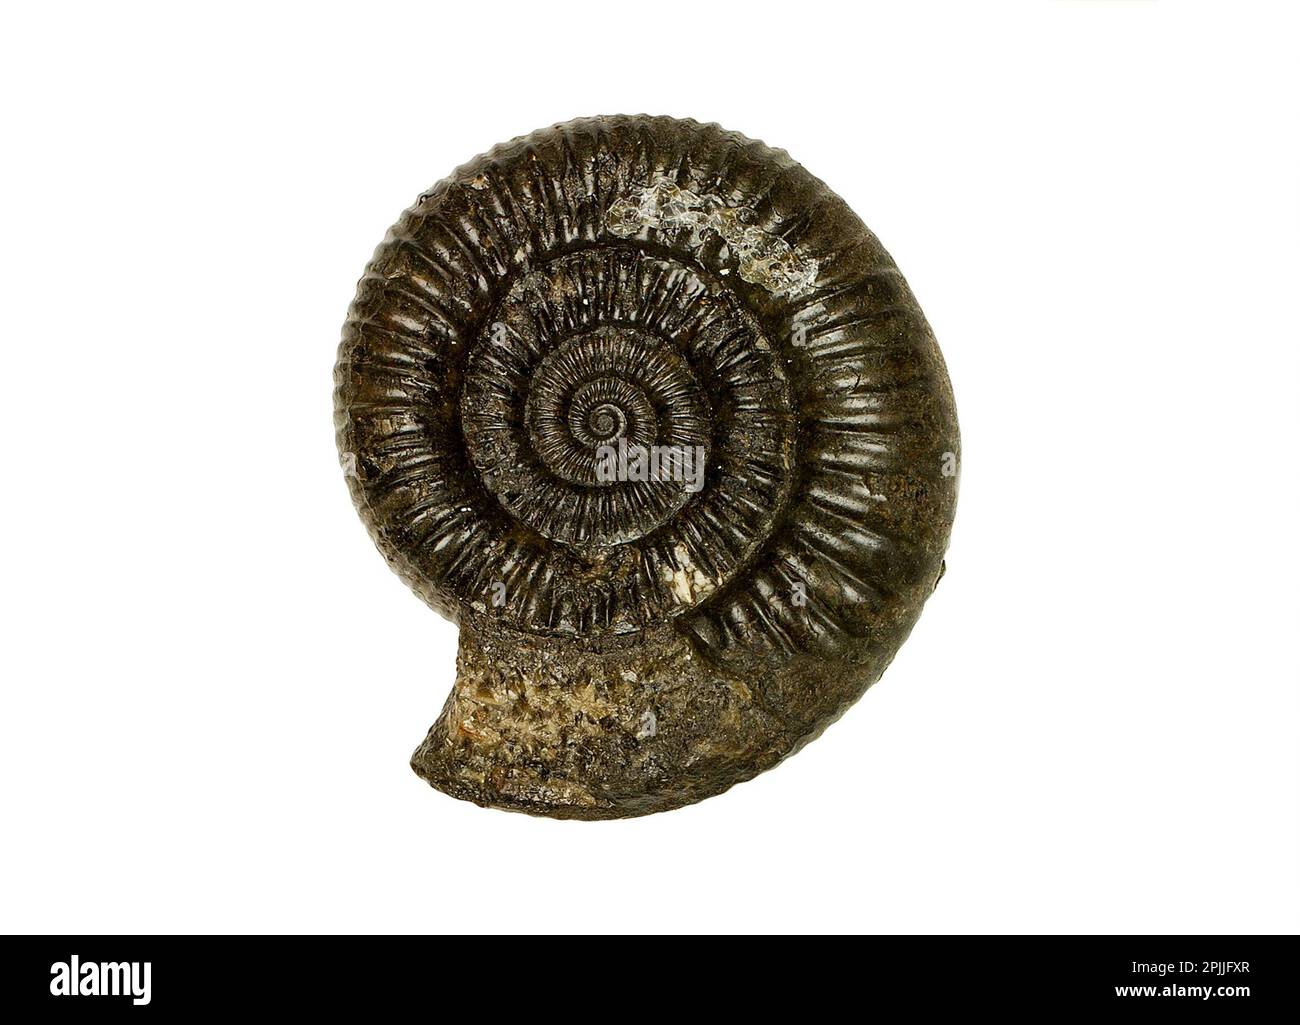 Fossilized ammonite shell, Dactylioceras, fossil specimen isolated on white background Stock Photo